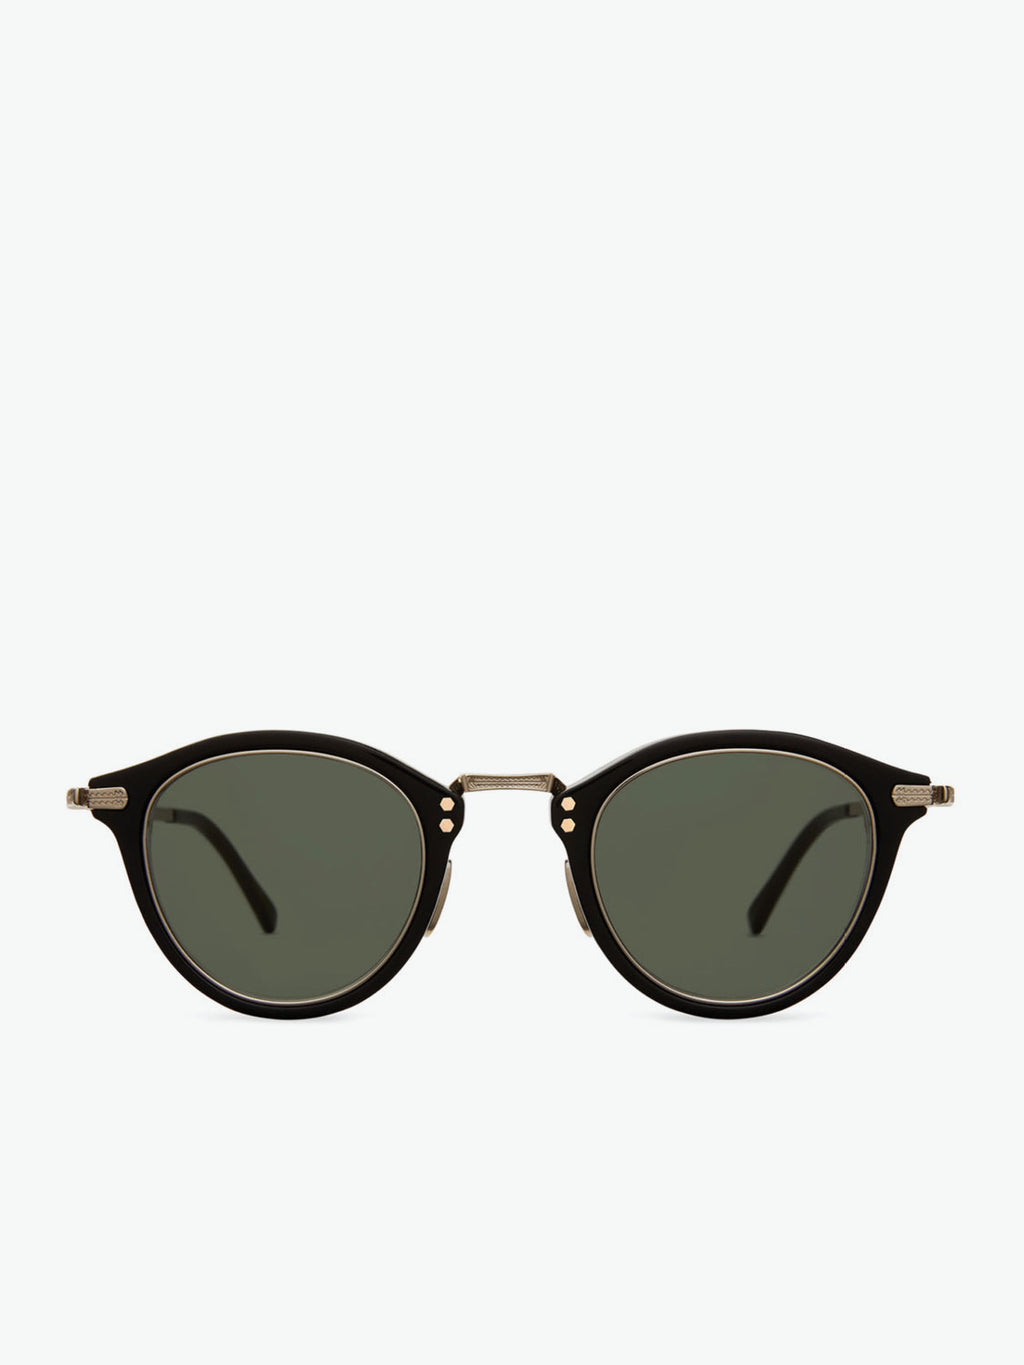 Mr Leight Stanley S Black Sunglasses